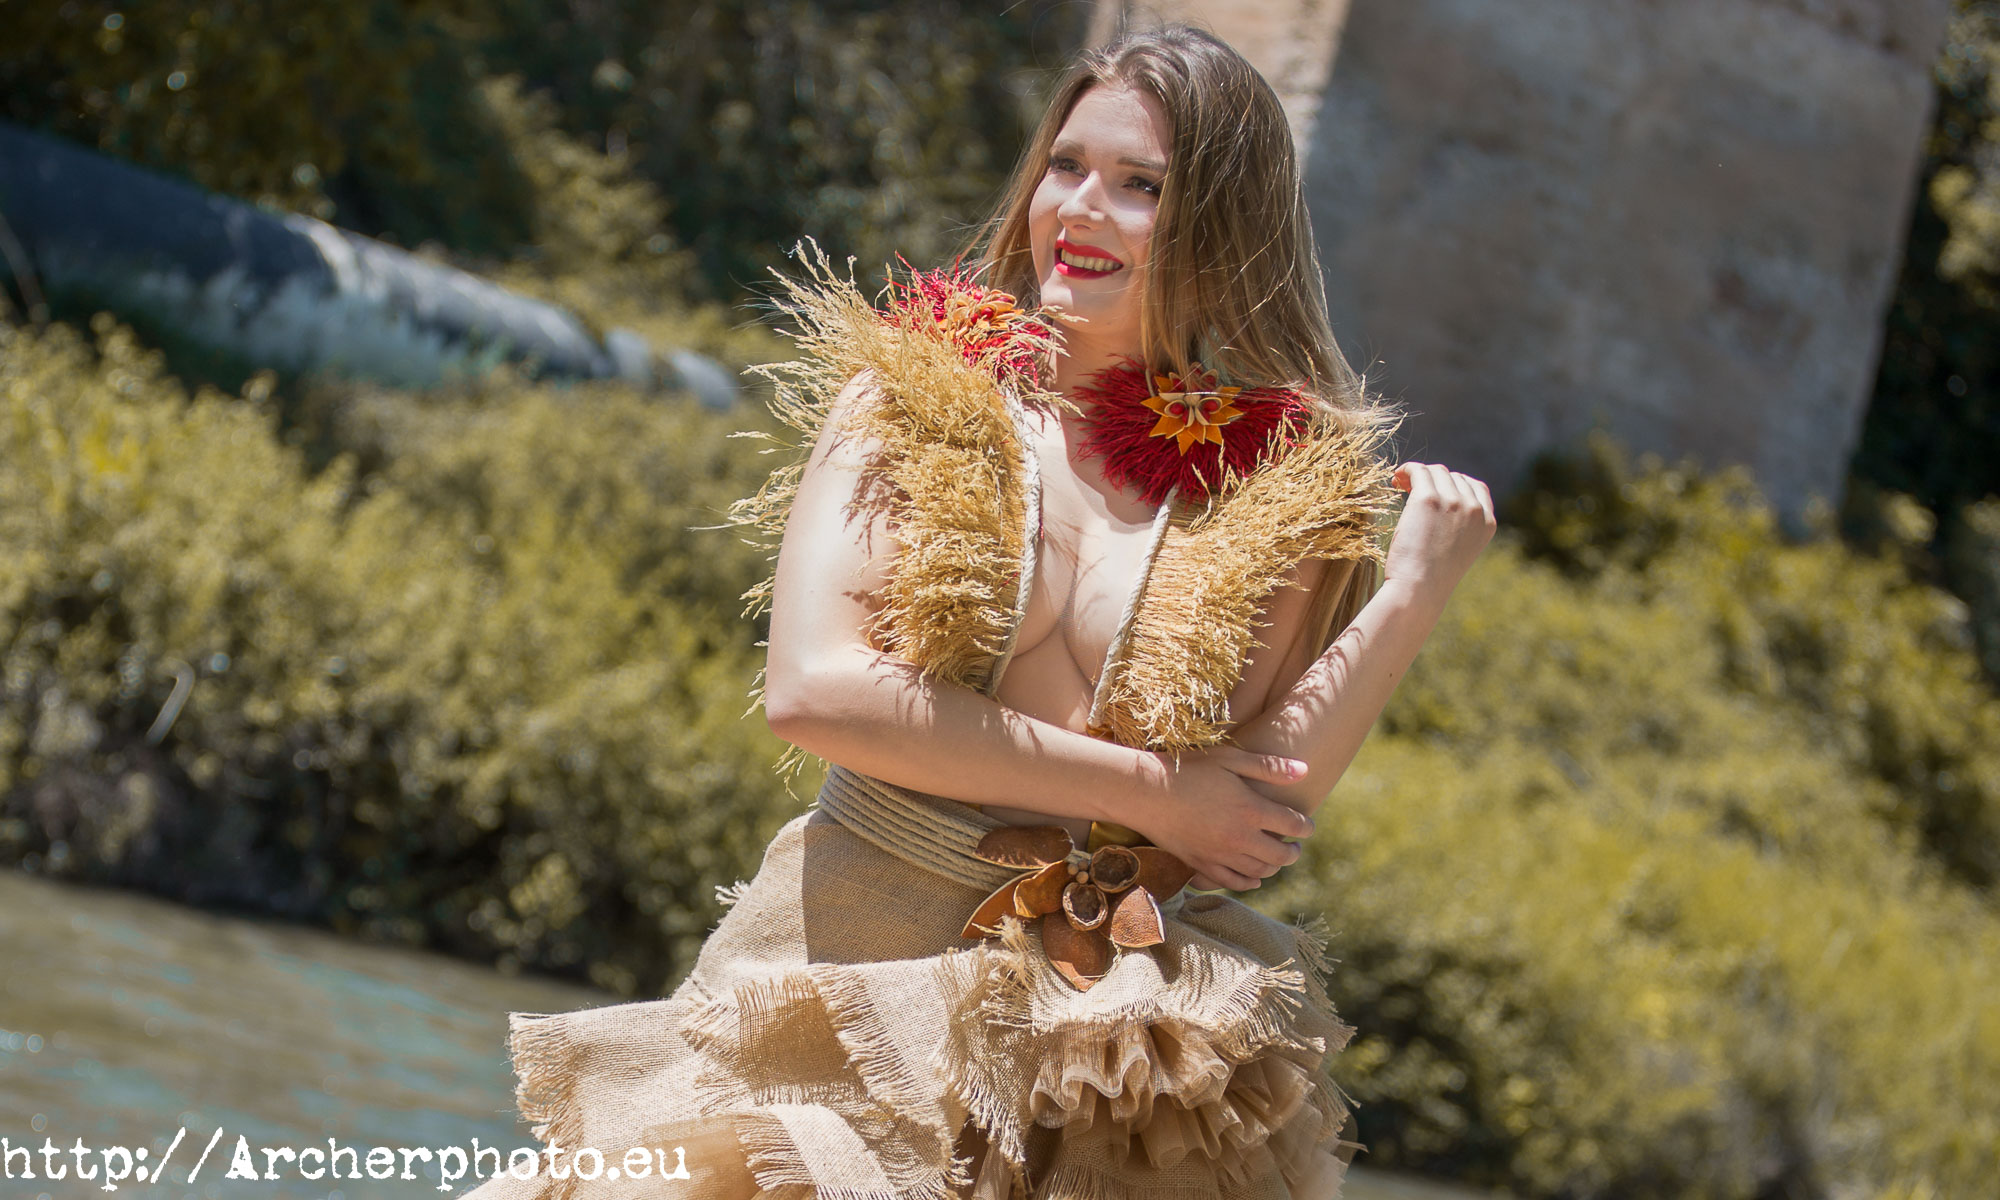 Vestido ecológico de Pier Franco por Sergi Albir, fotógrafo en Valencia